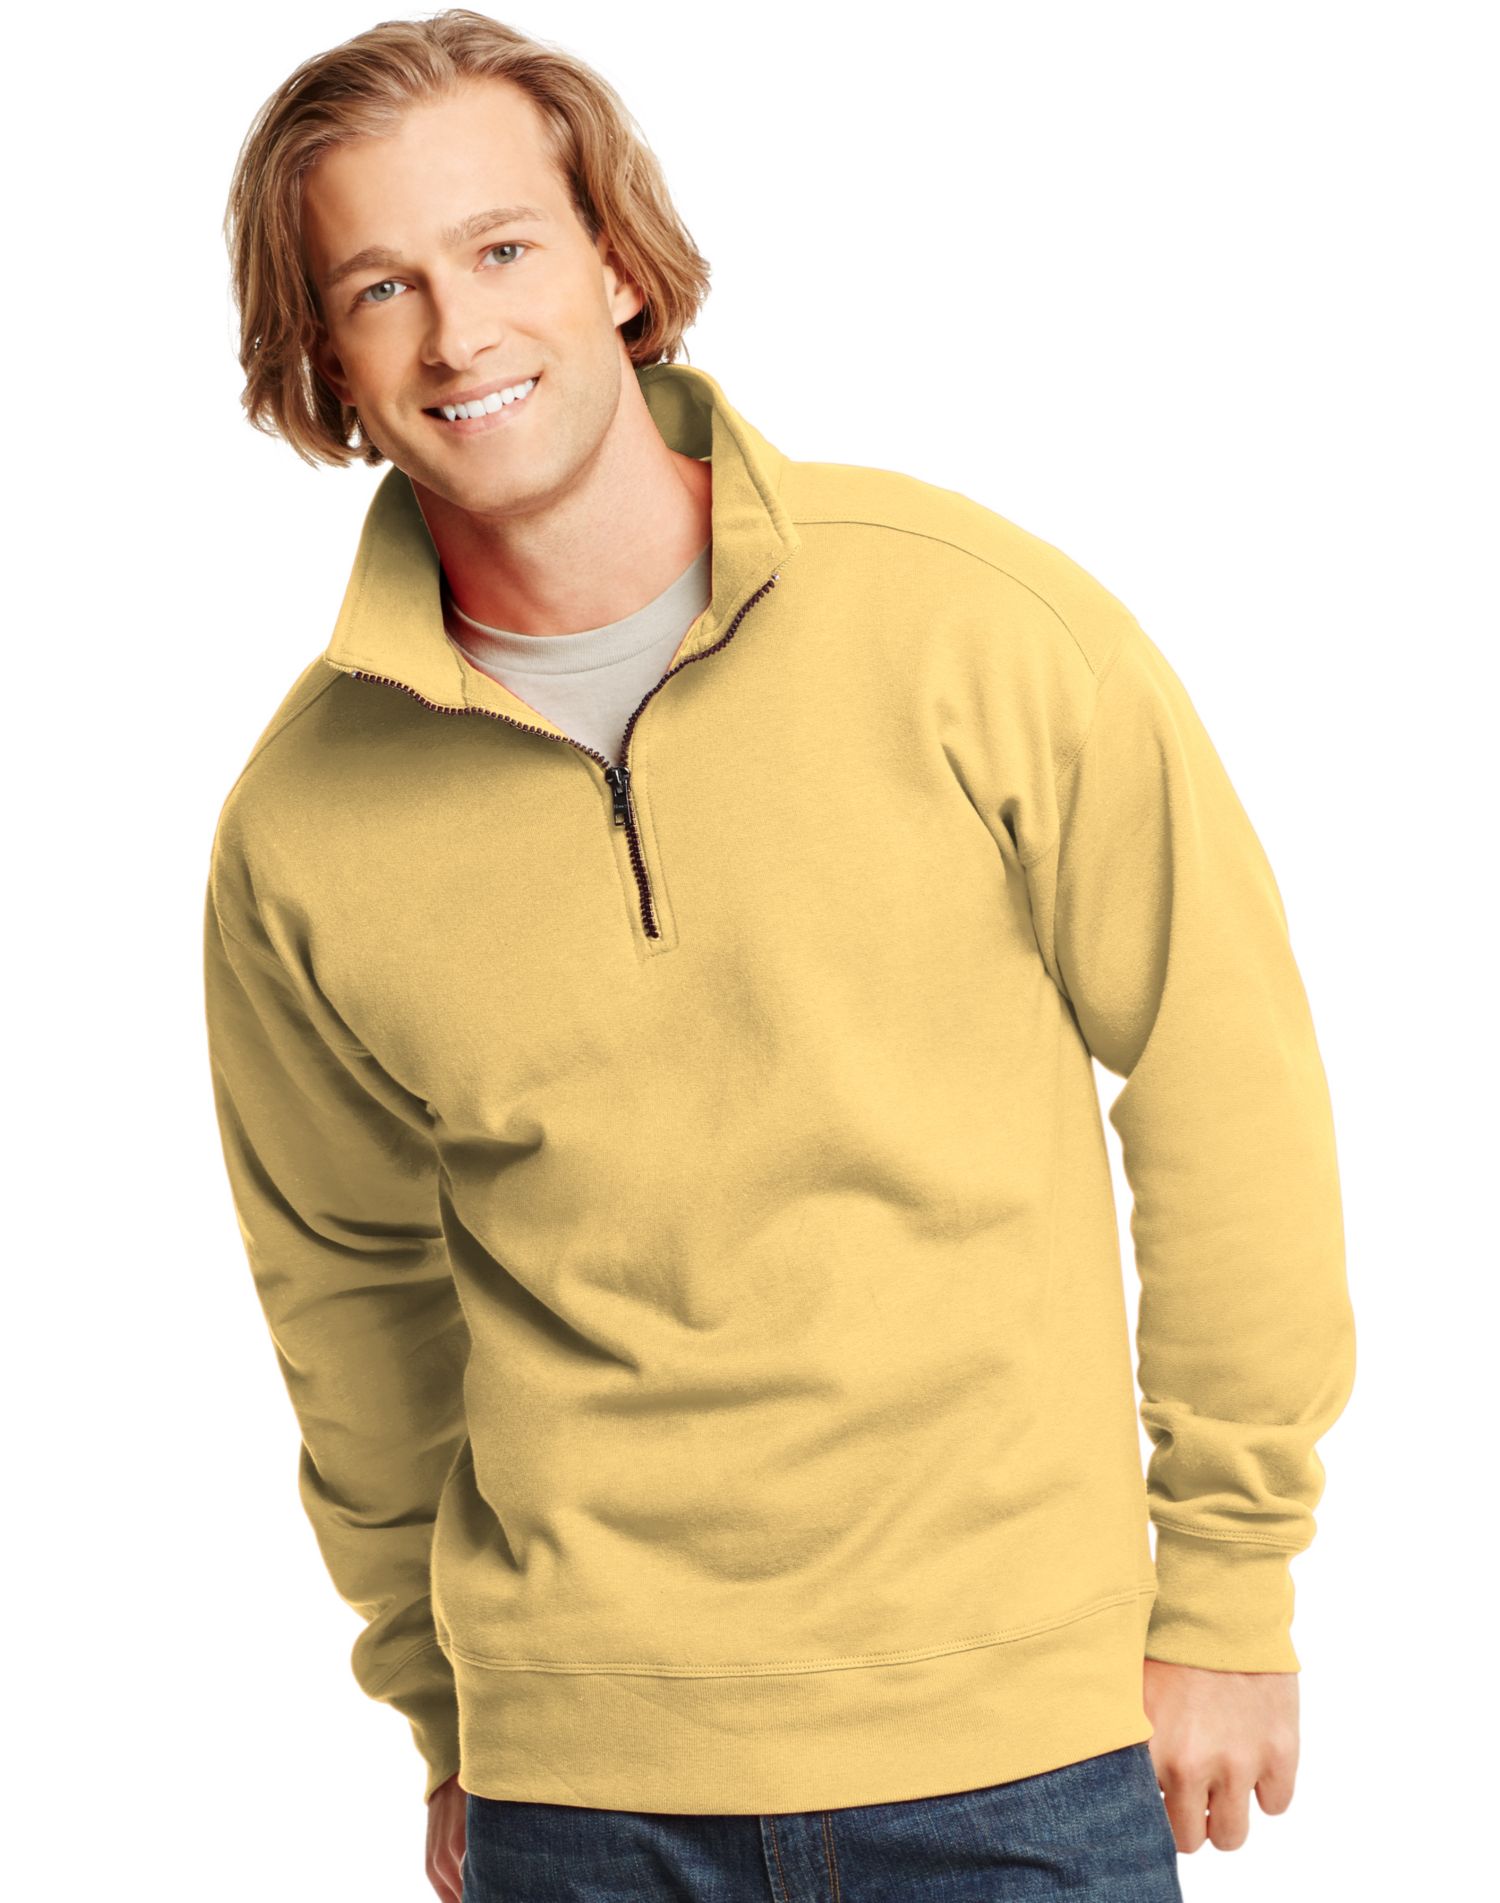 Big Men's Nano Premium Soft Lightweight Fleece Jacket - image 1 of 2